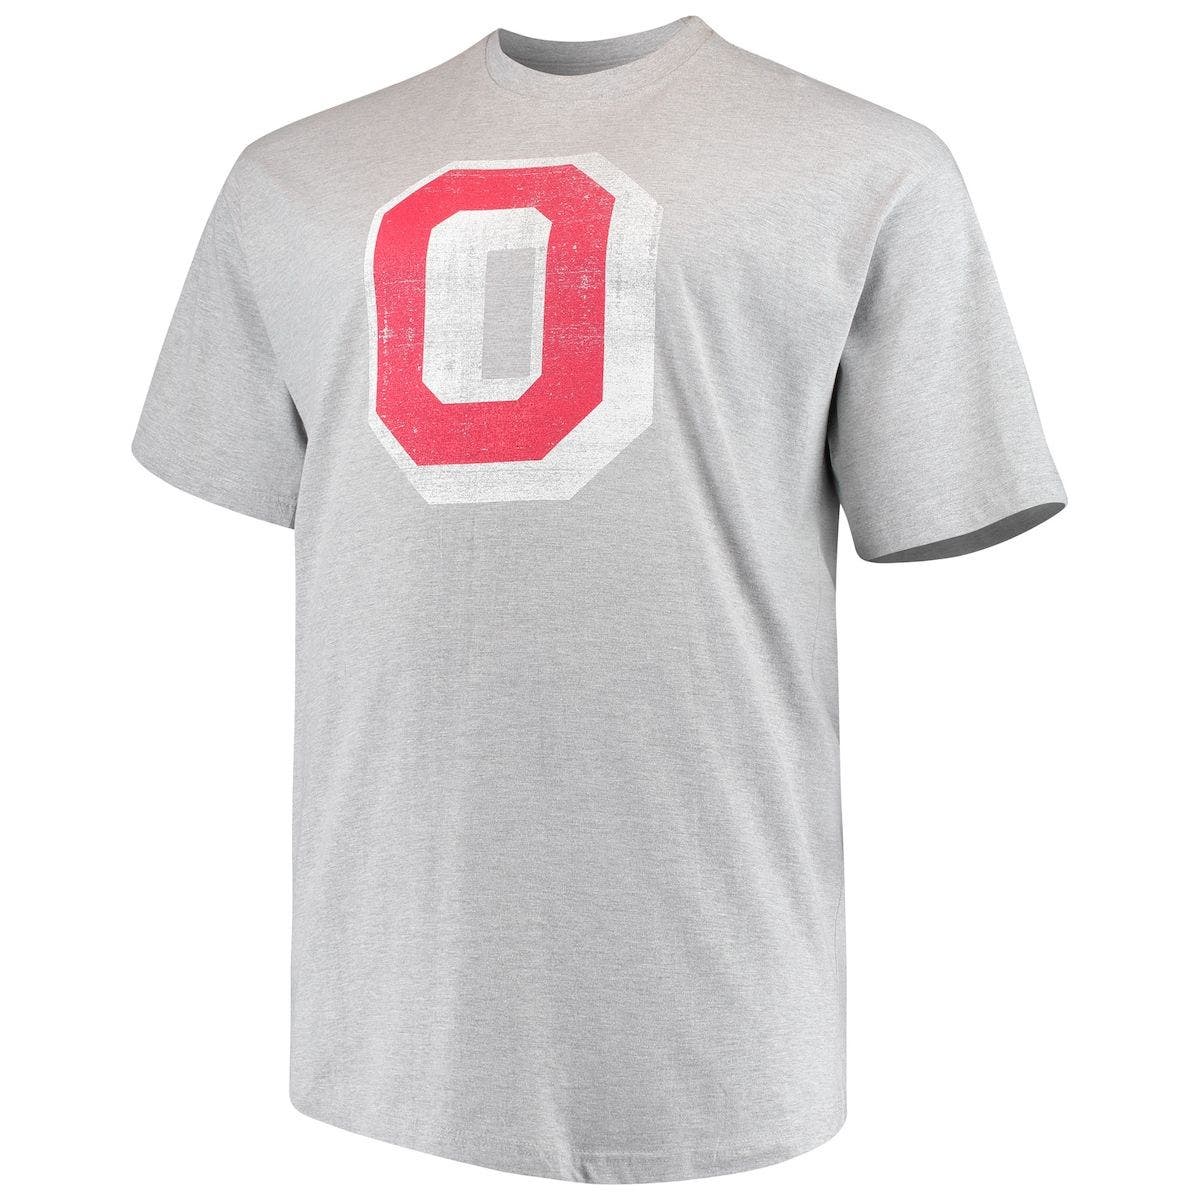 Ohio Retro Vintage State Travel Short Sleeve T-Shirt